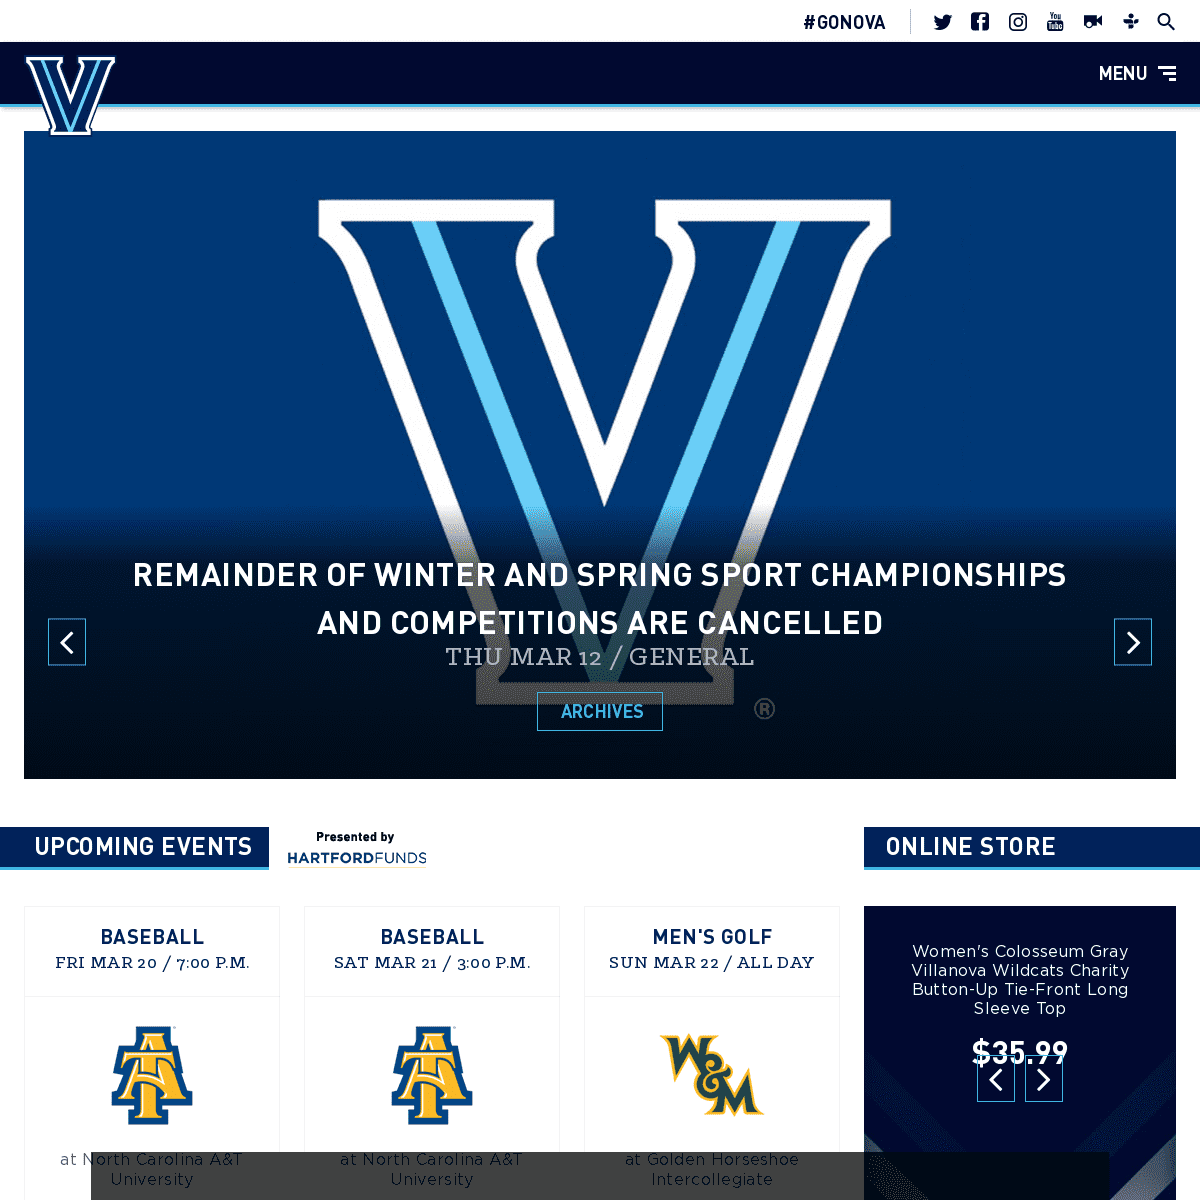 A complete backup of villanova.com